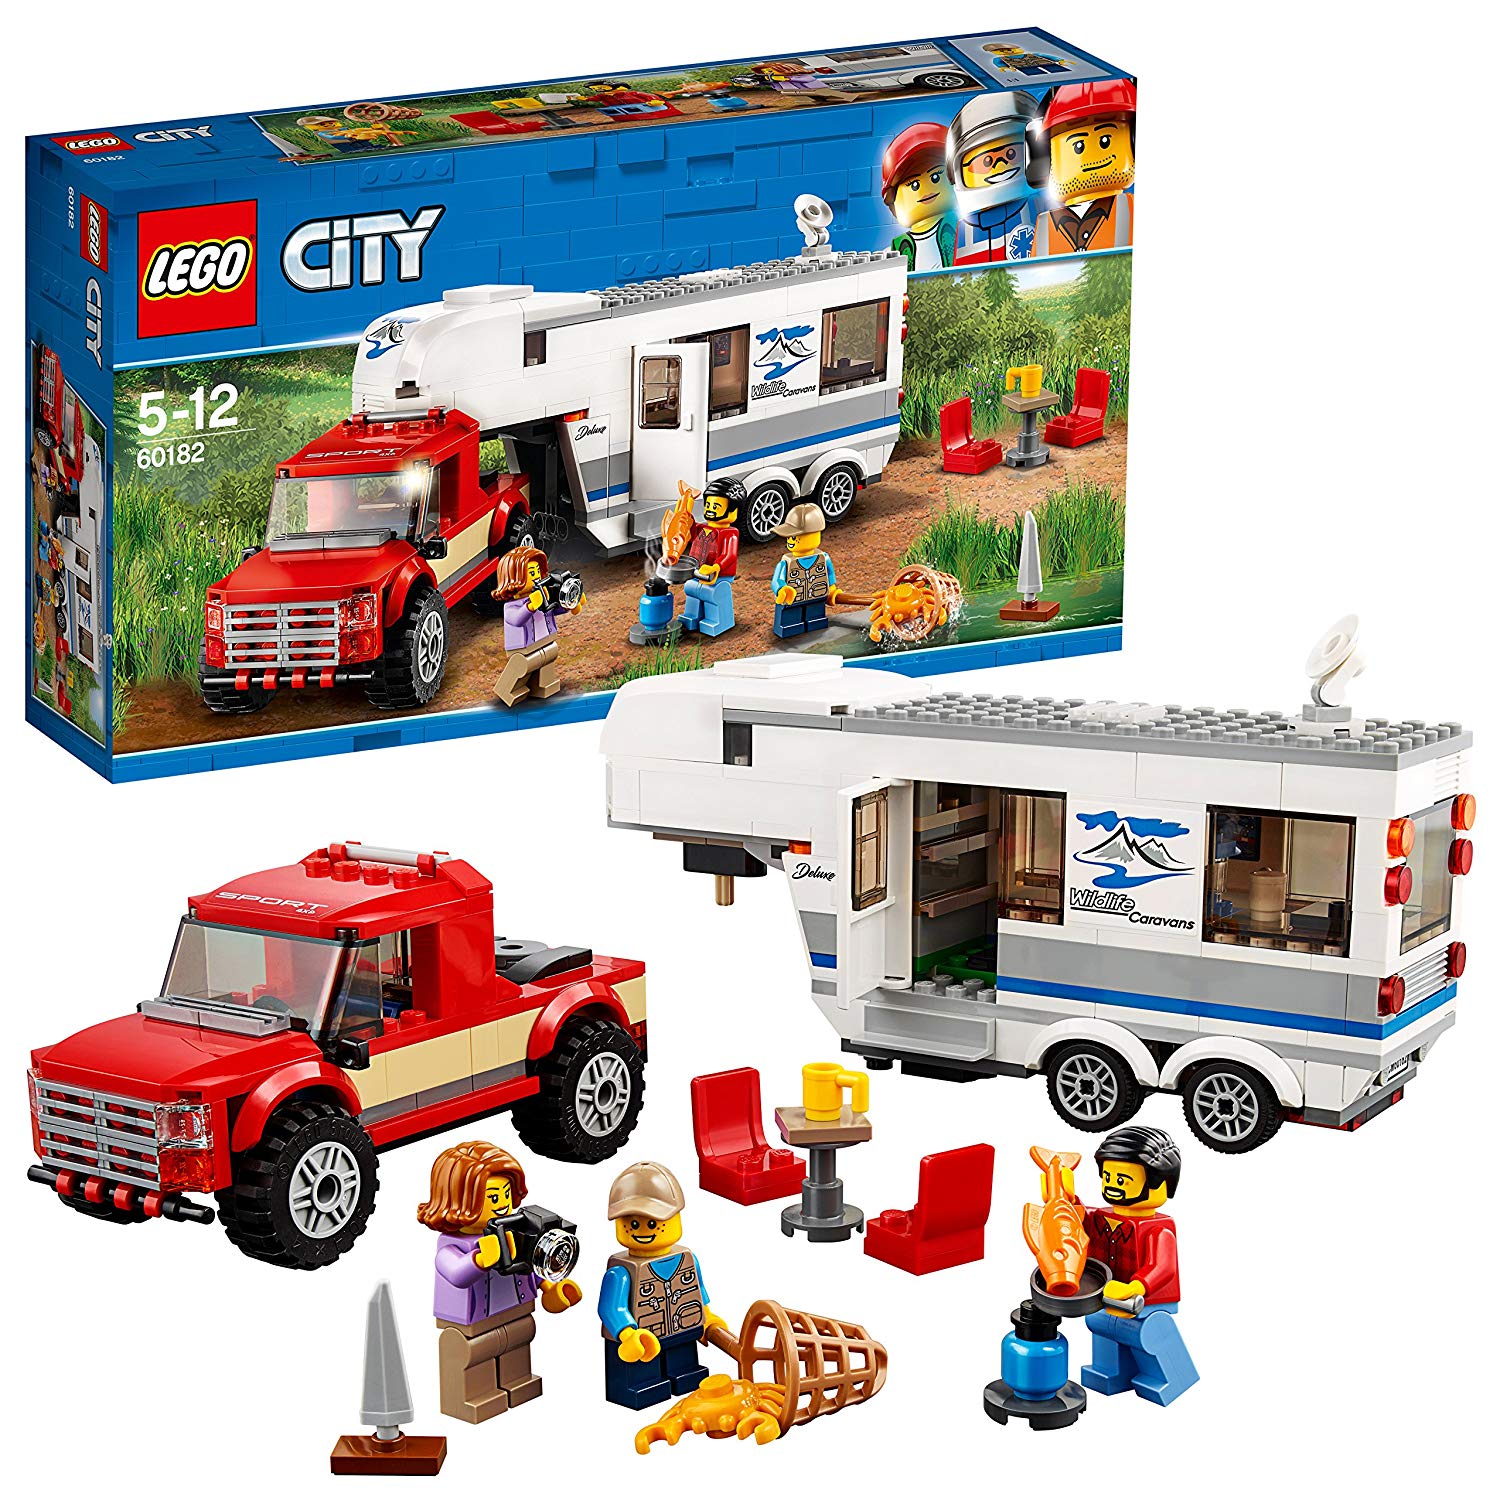 Lego 60182 City Great Vehicles Pickup And Caravan Playset Vehicle